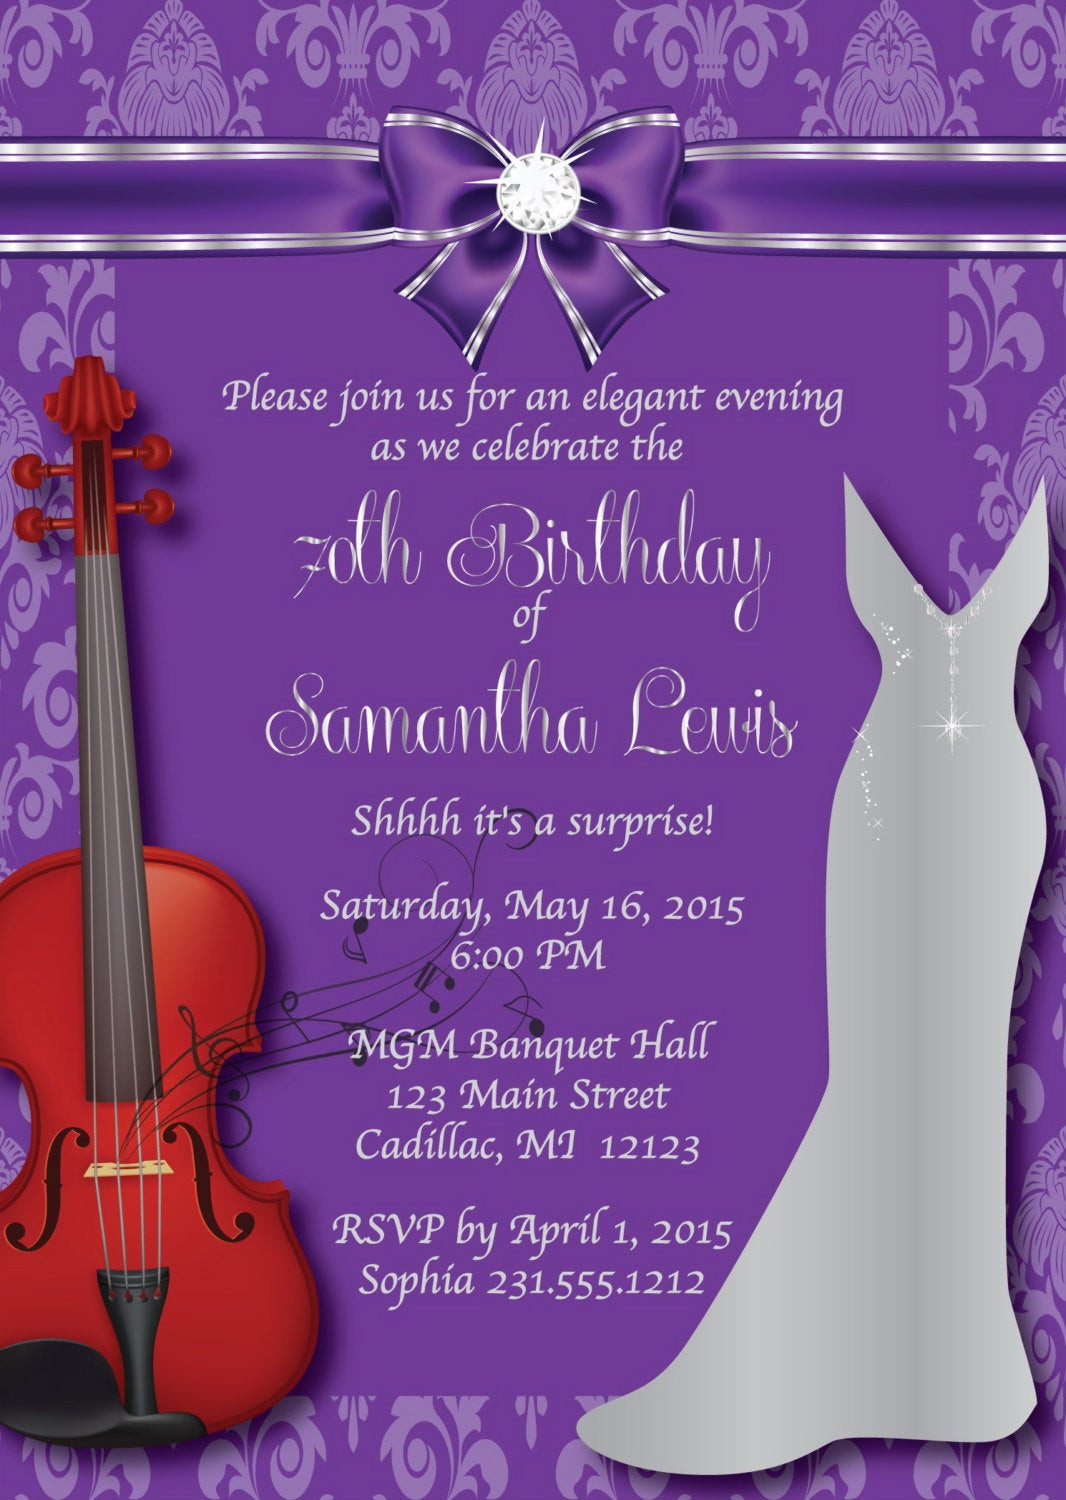 Best ideas about Elegant Birthday Invitations
. Save or Pin 70th Birthday Invitation Women s Elegant Birthday Now.